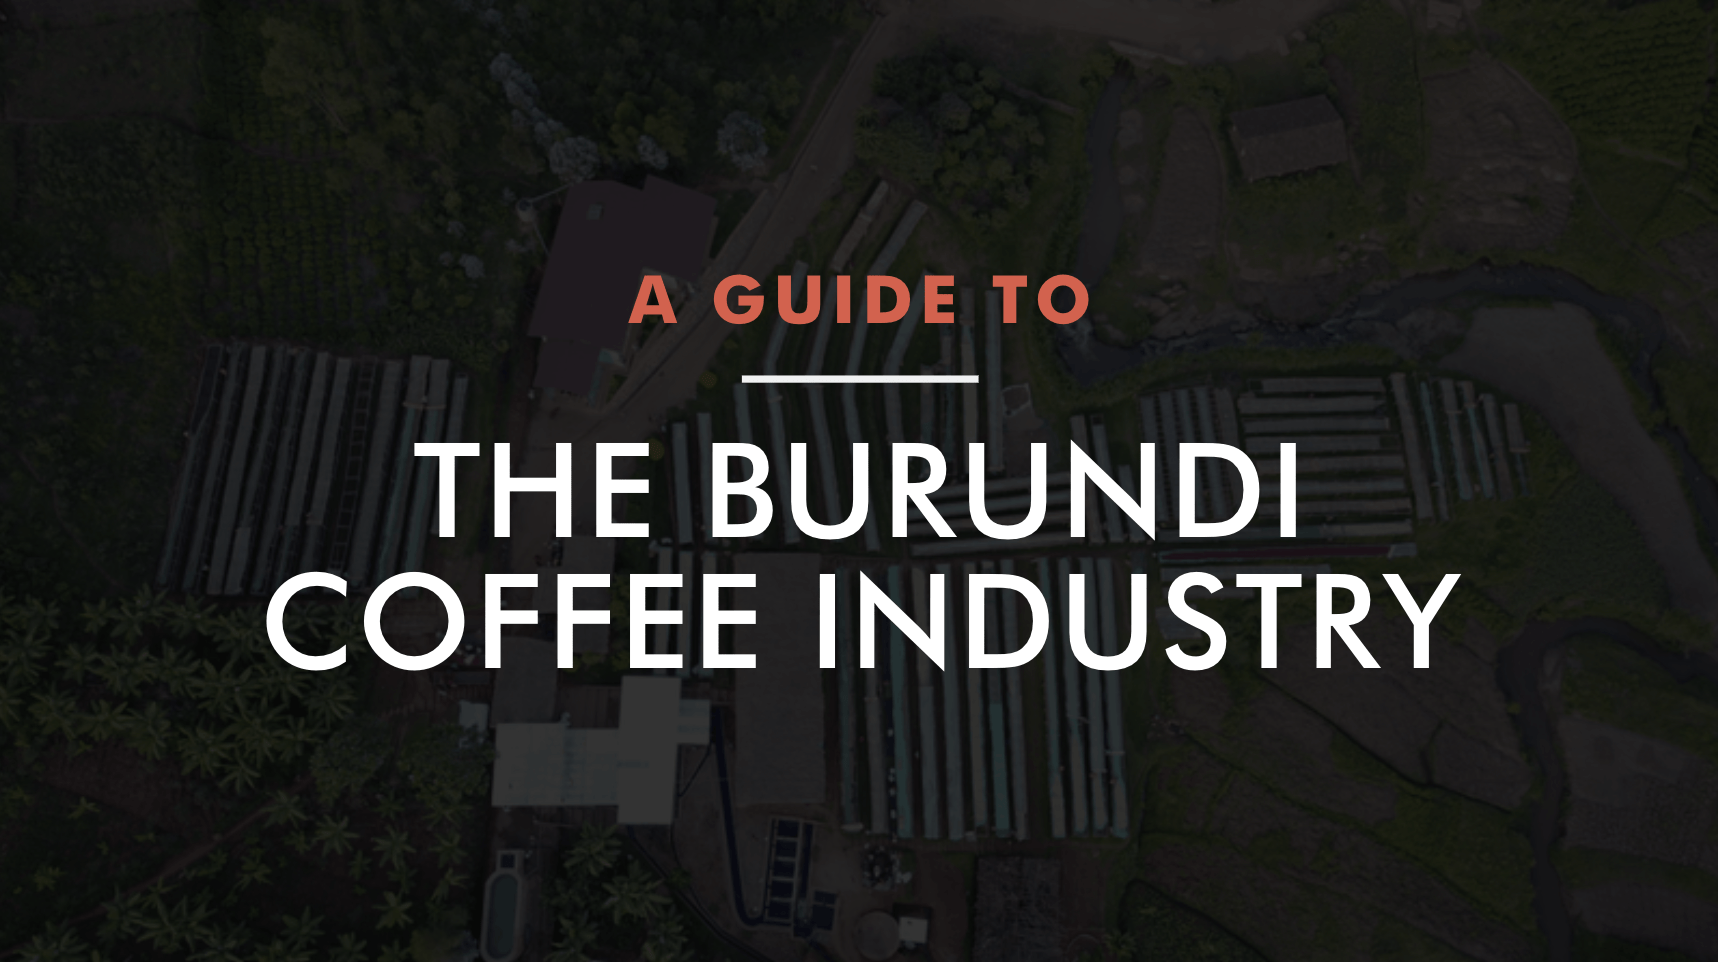 The Burundi Coffee Industry